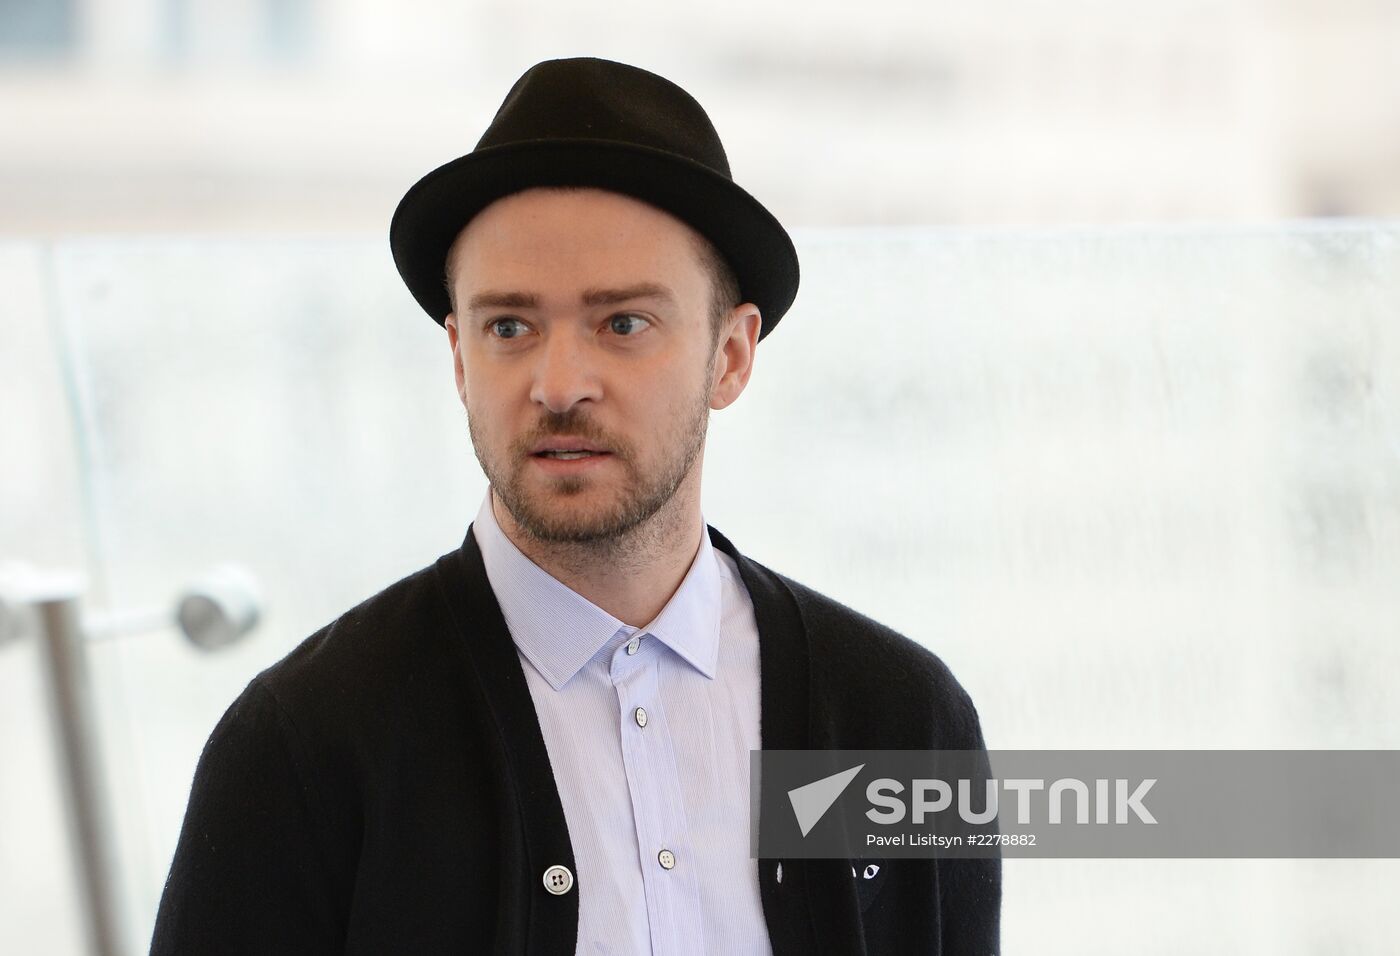 Photo call with Justin Timberlake